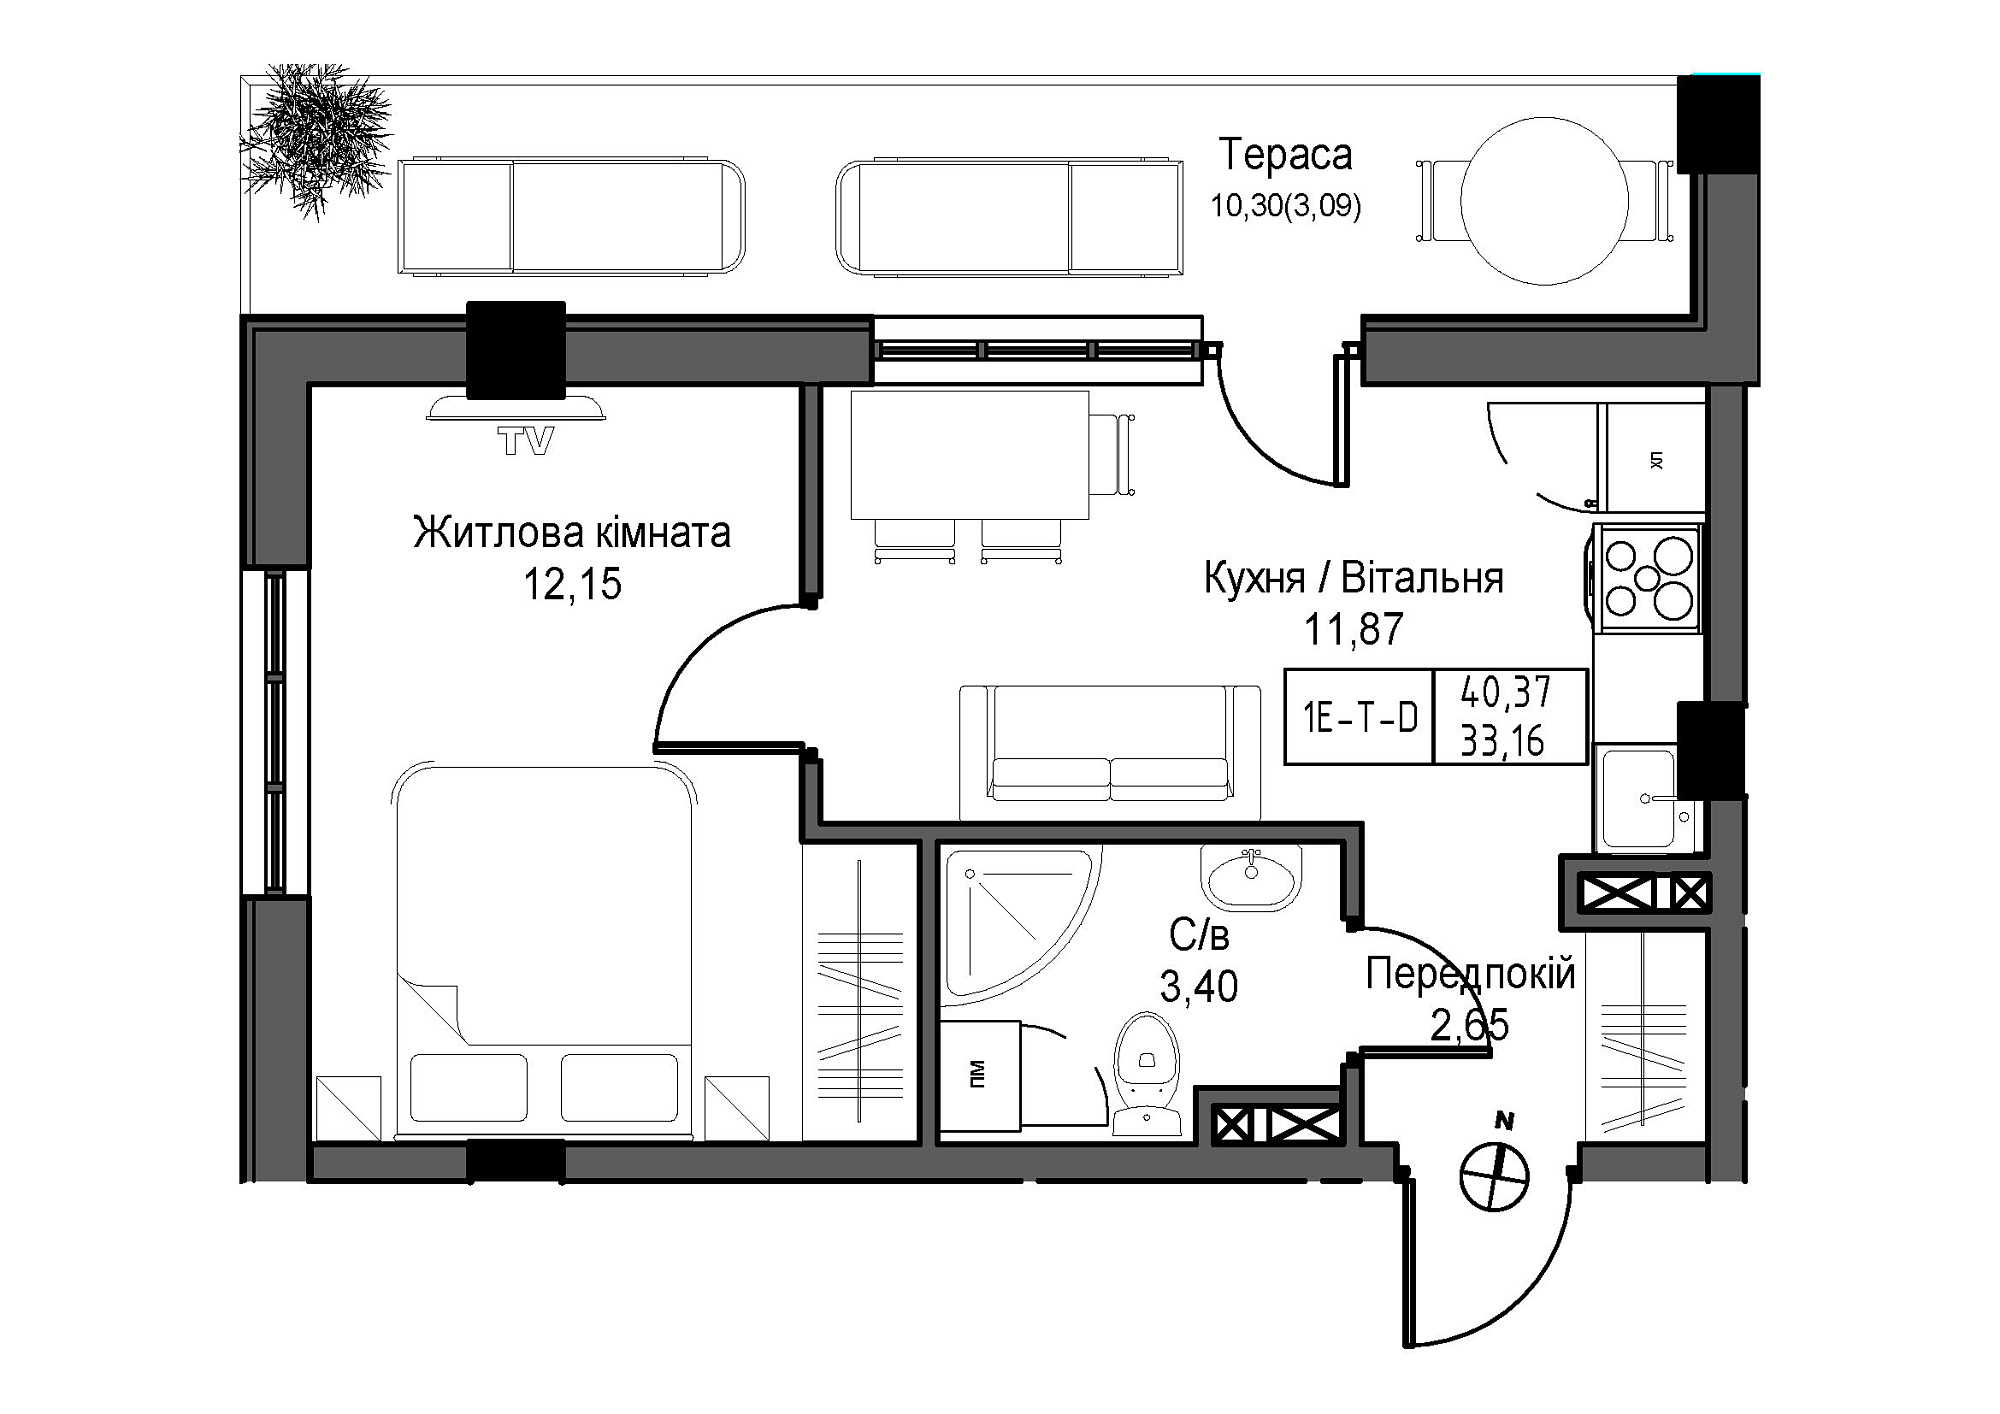 Планування 1-к квартира площею 33.16м2, UM-007-04/0002.